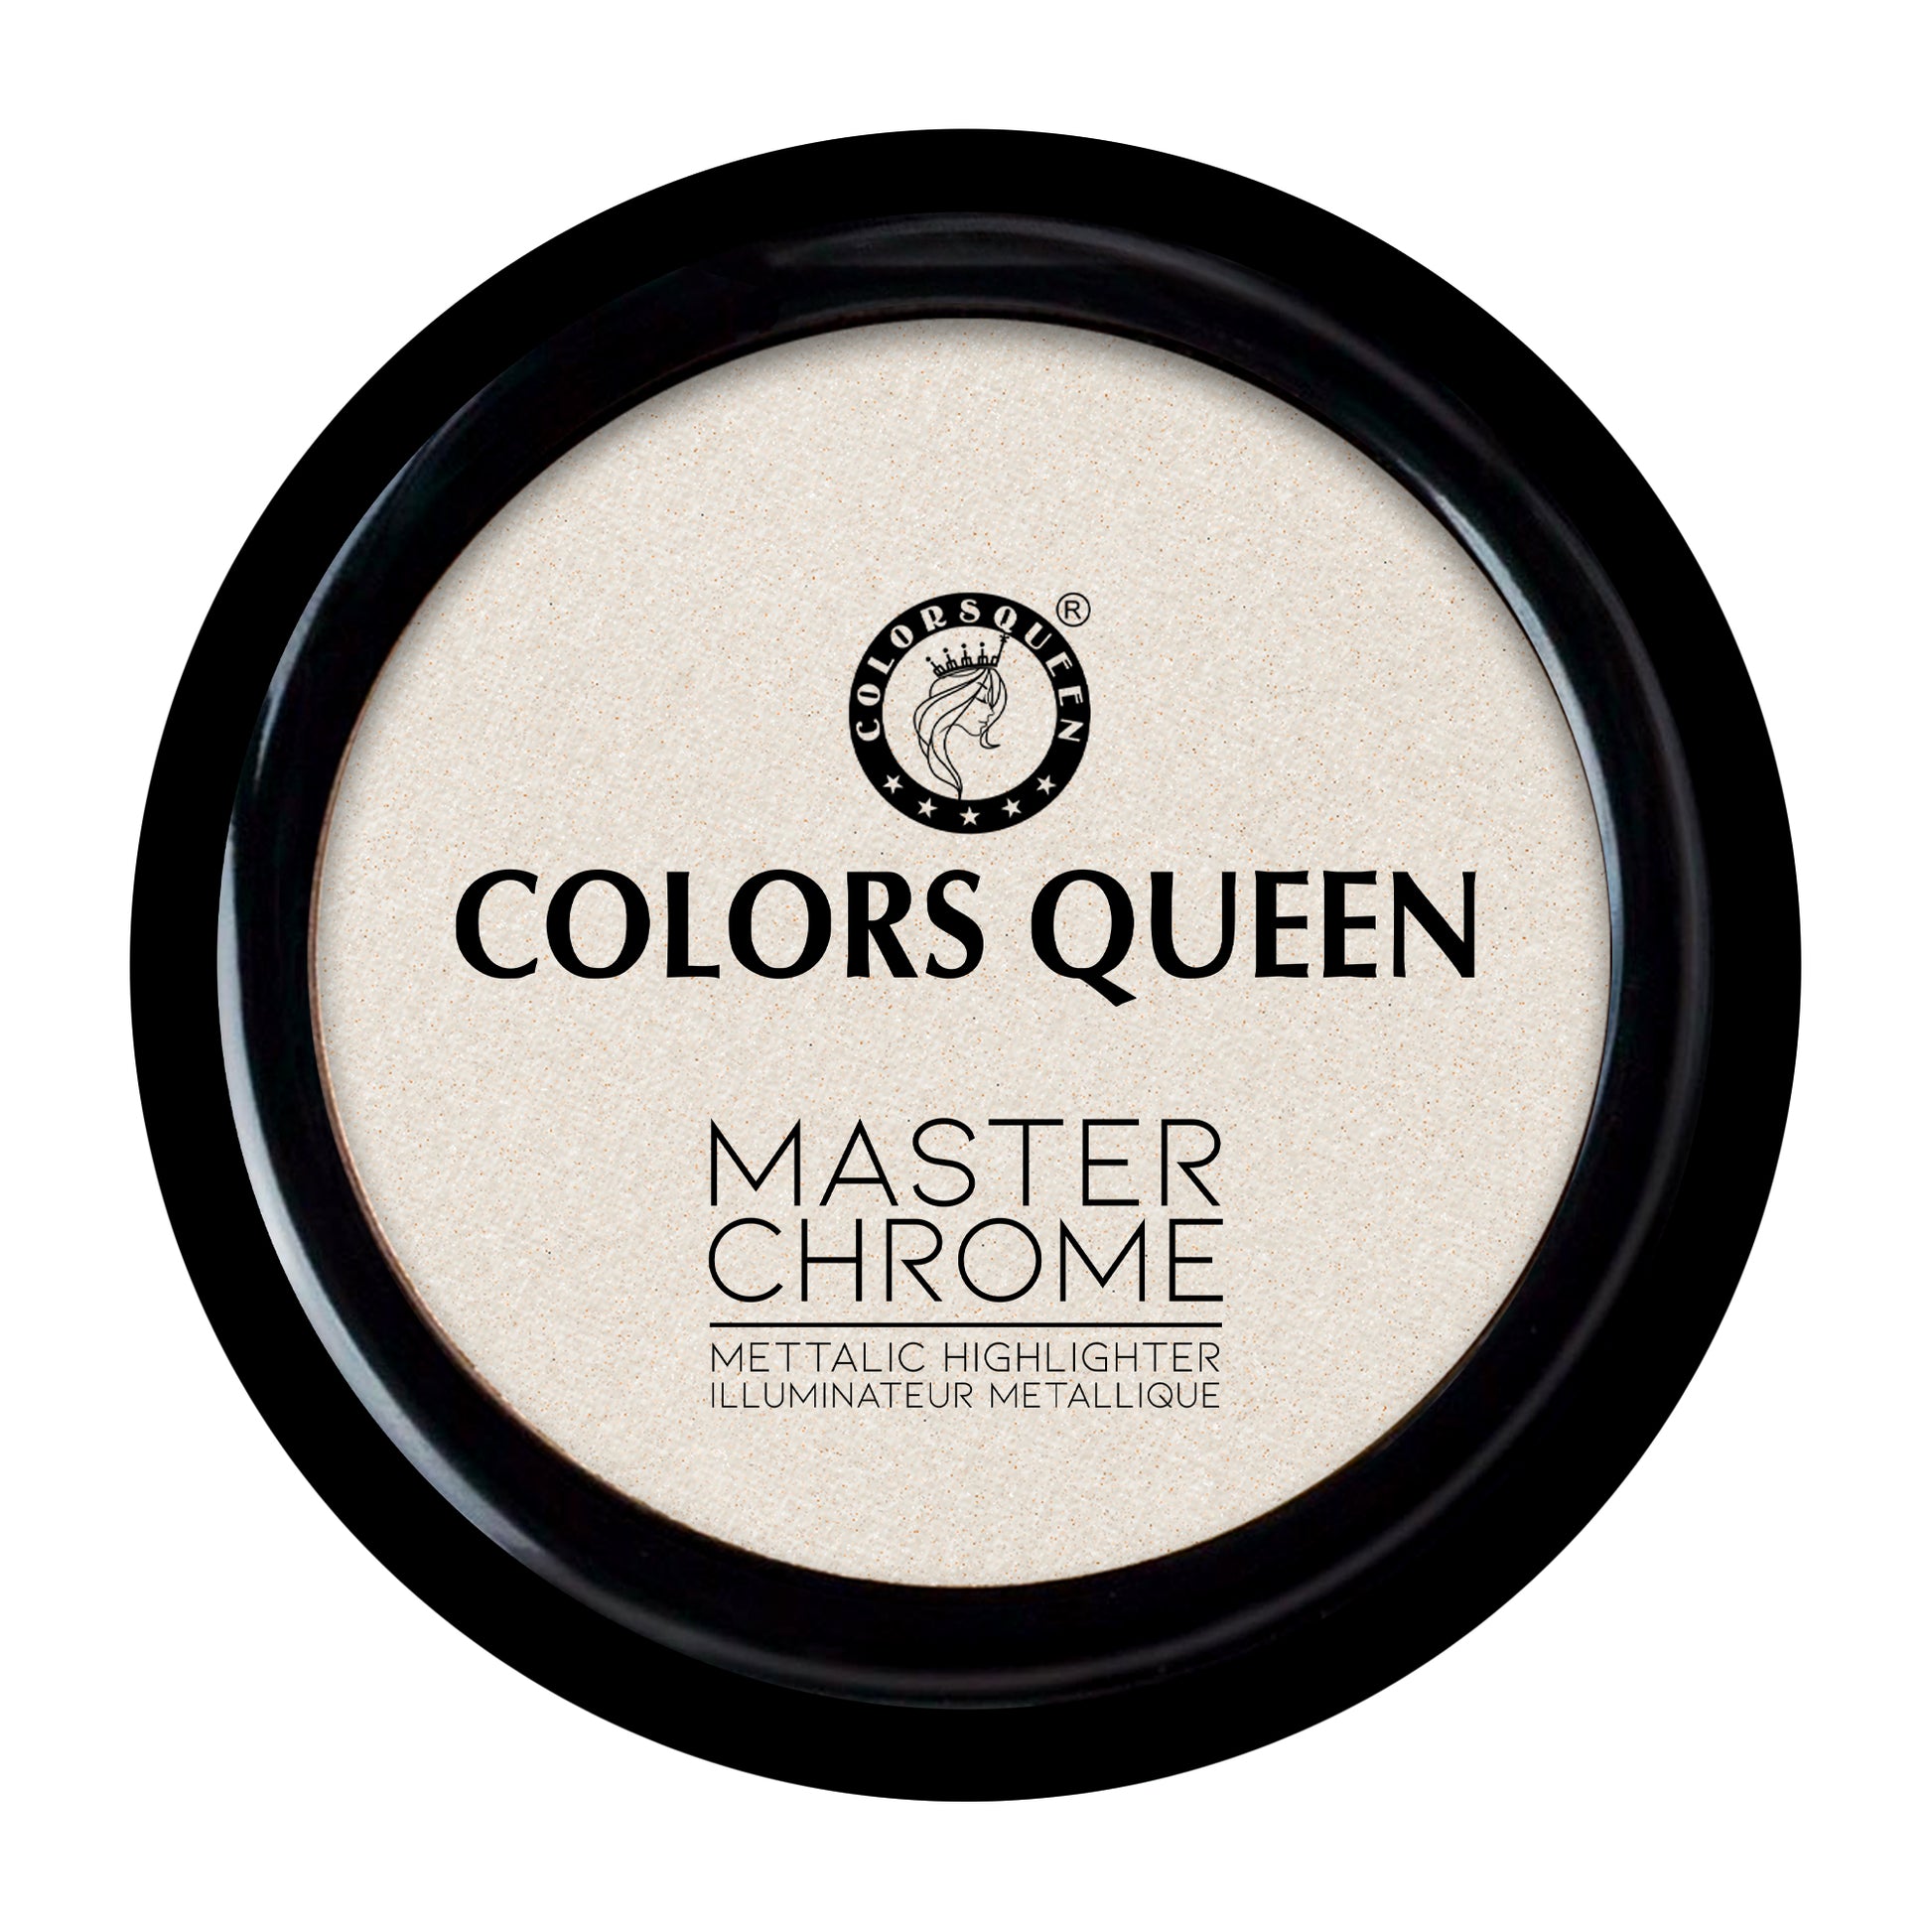 Colors Queen Master Chrome Metallic Highlighter